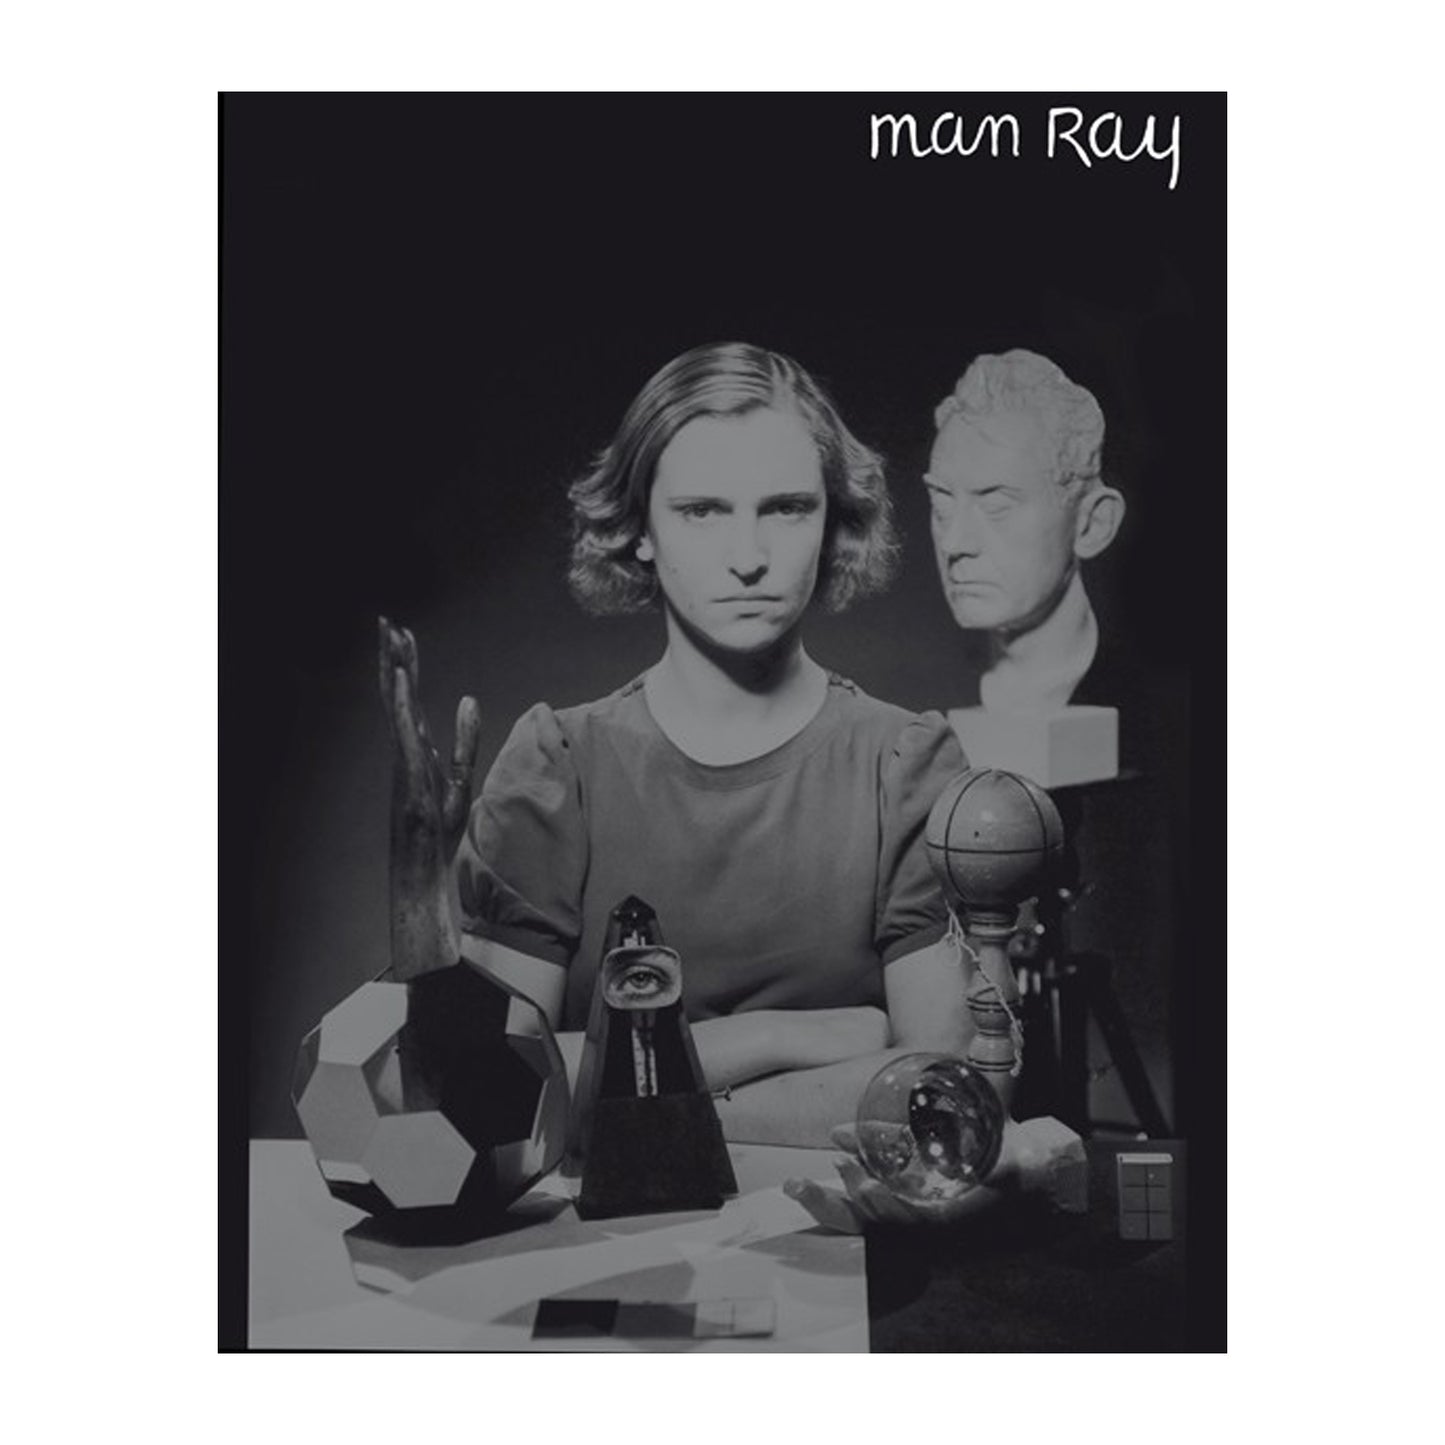 Man Ray by Ingried Brugger and Lisa Ortner-Kreil (German Edition)